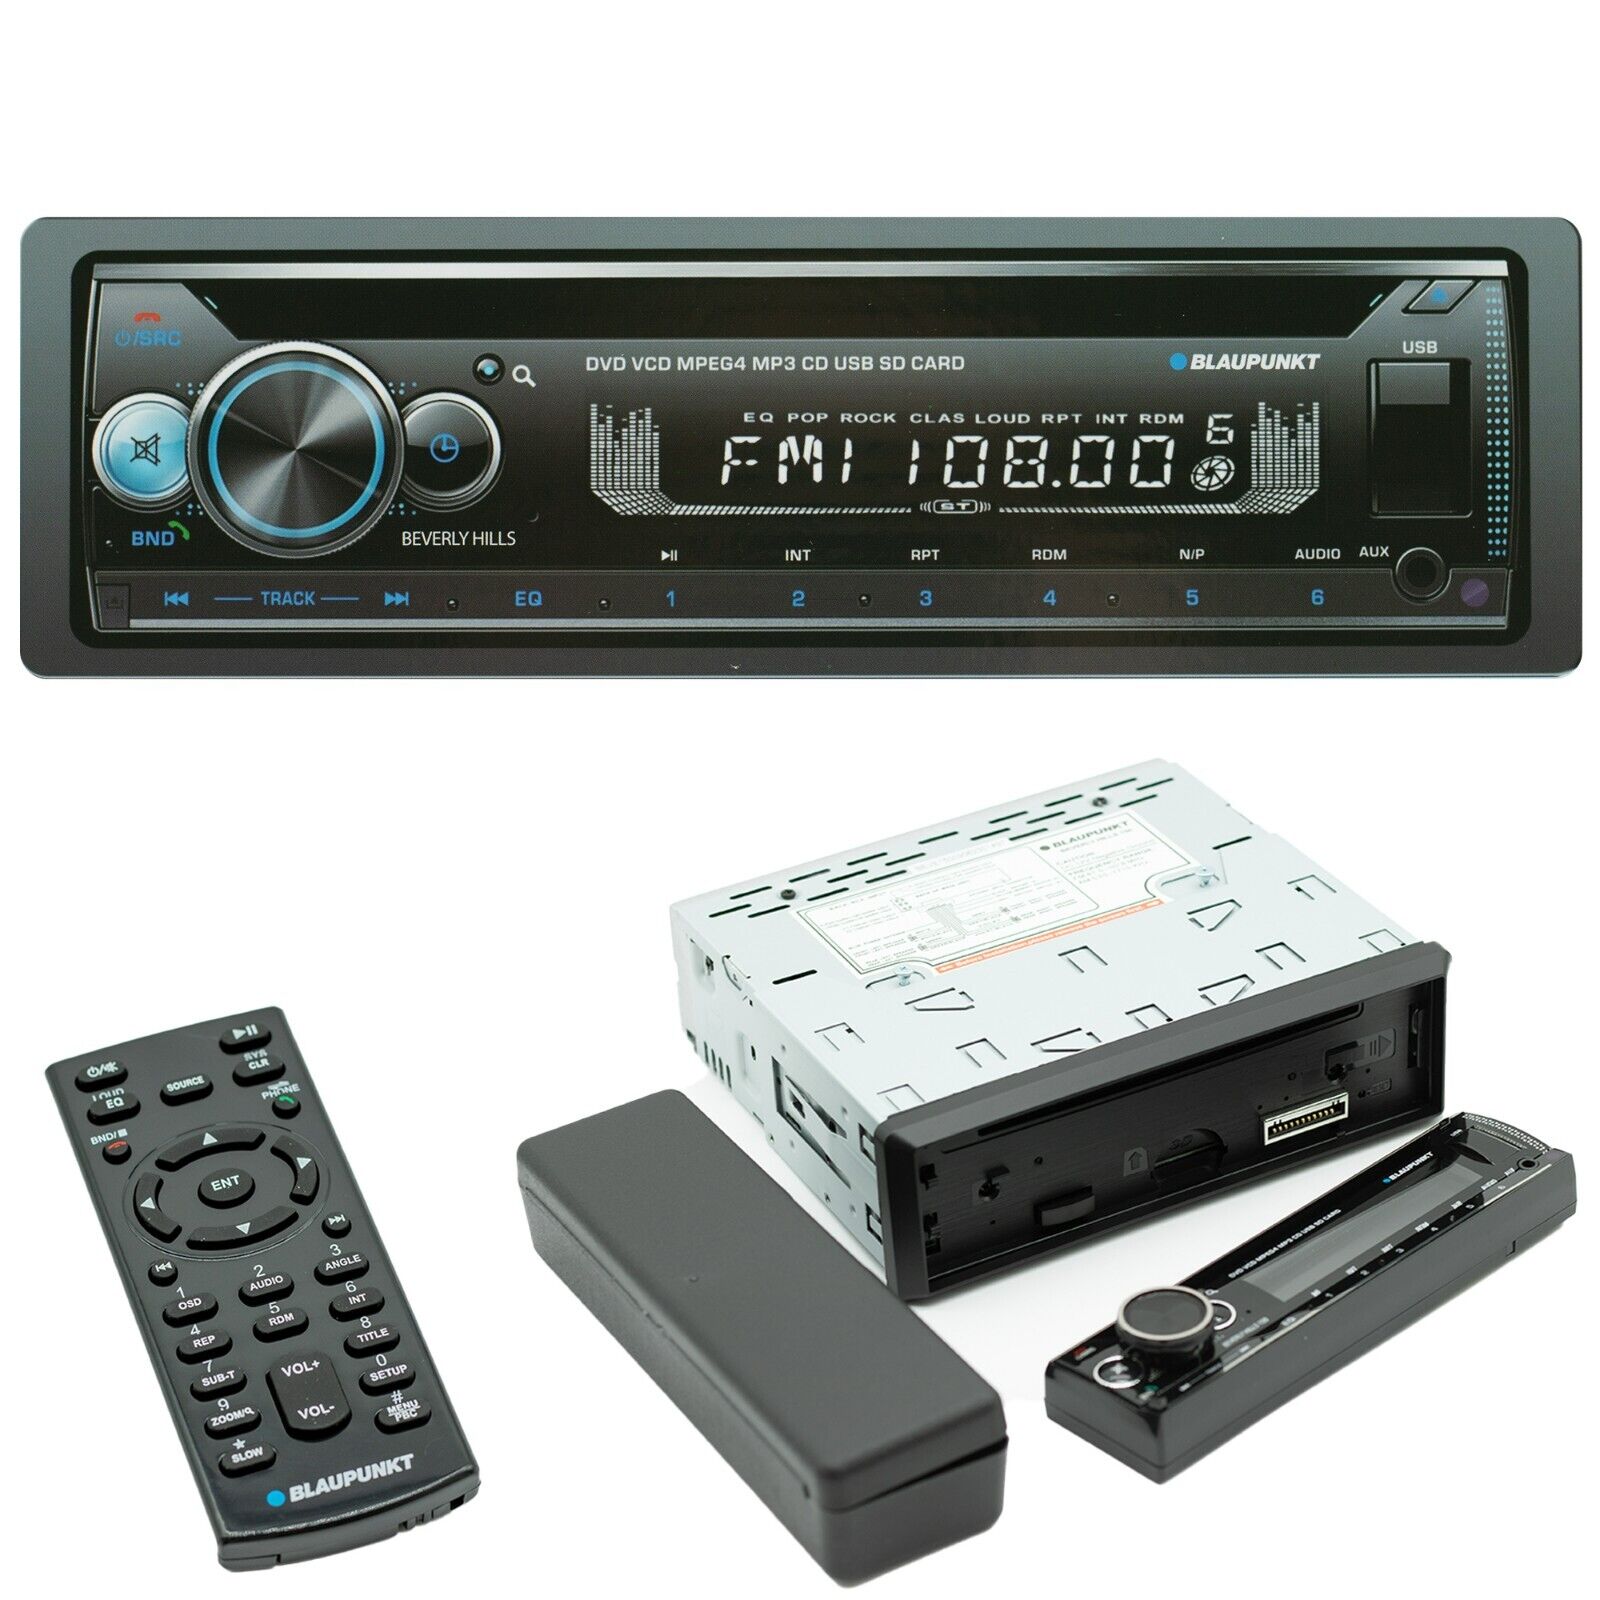 Blaupunkt BEVERLYHILLS150 - Single DIN DVD CD MP3 120W Car Stereo with Bluetooth